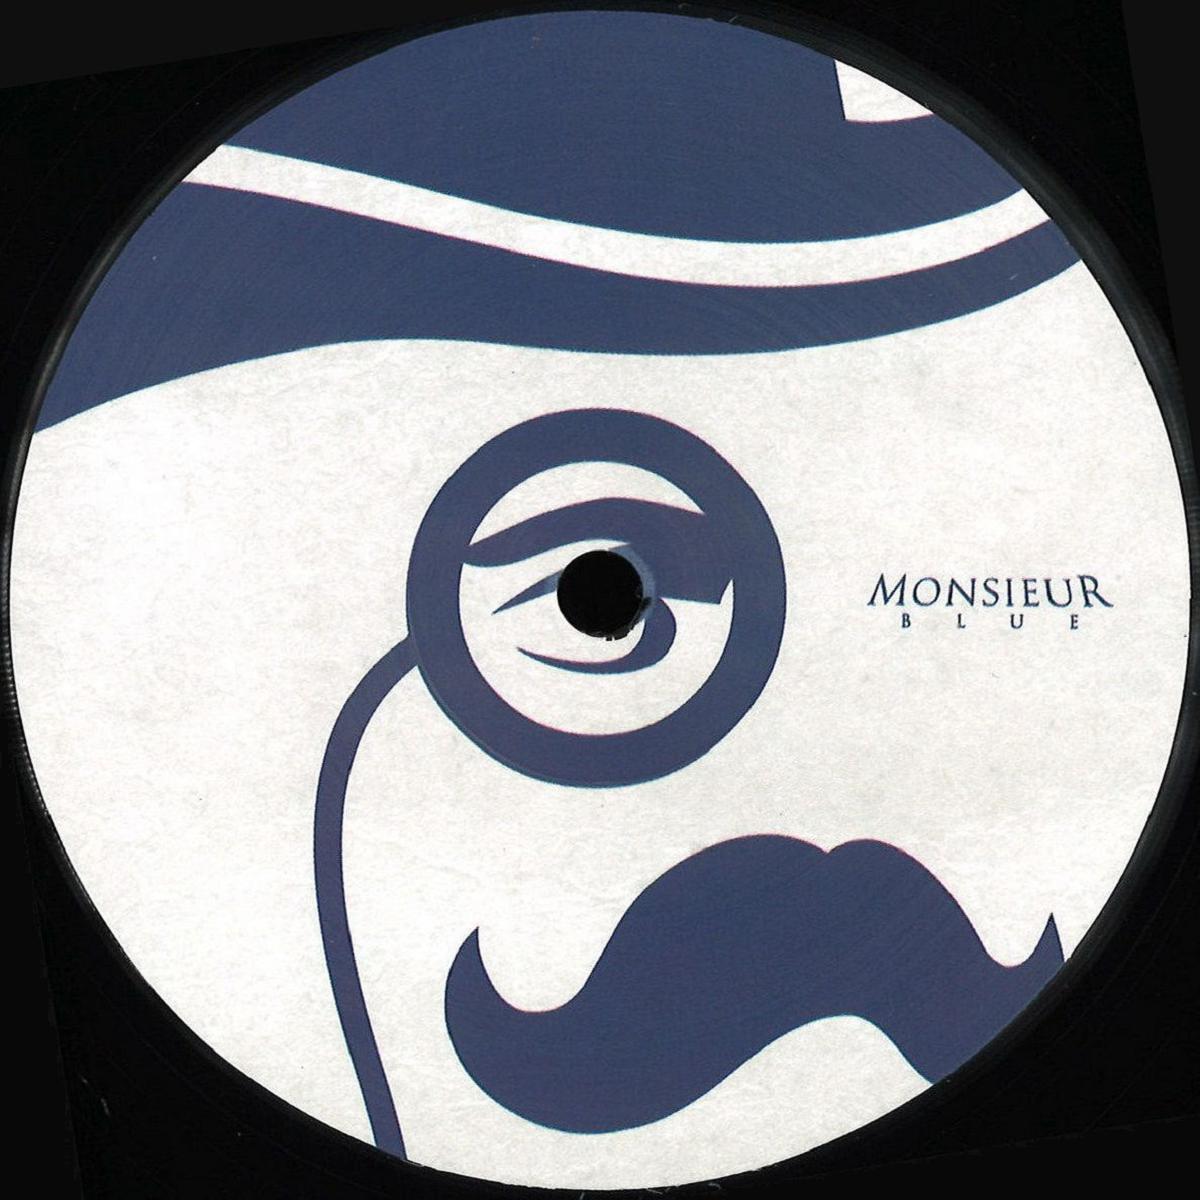 Download Monsieur Blue #05 on Electrobuzz